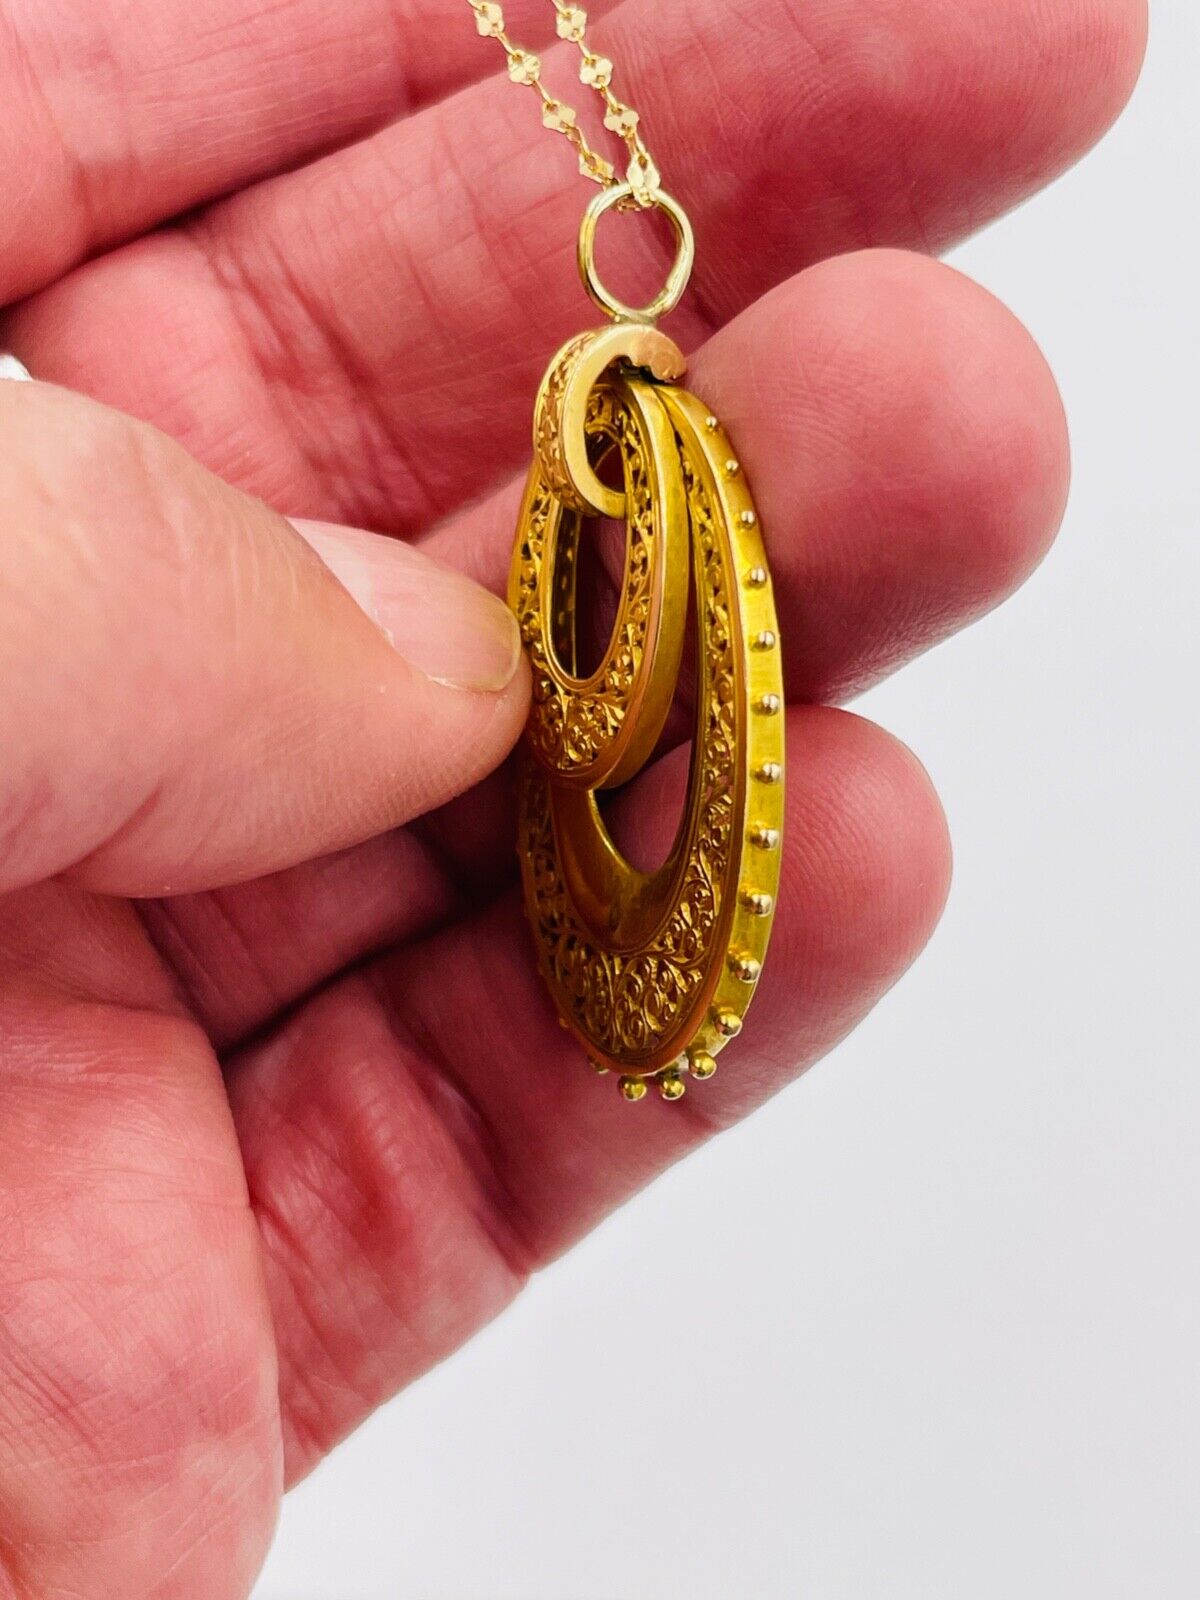 Antique 18k yellow Gold Filigree Pendant Necklace Victorian